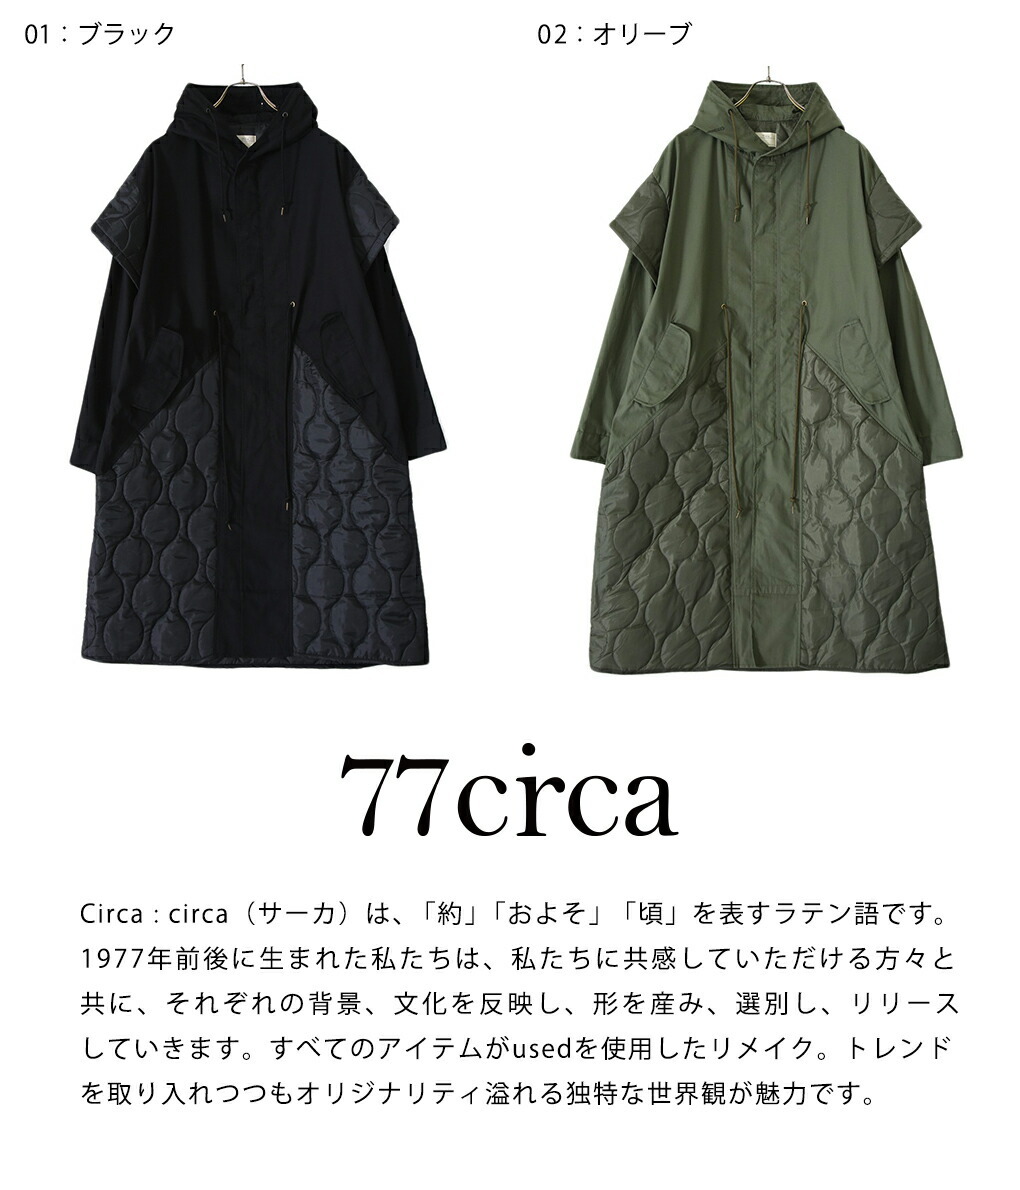 77circa / ナナナナサーカ ： 【レディース】circa make cutback